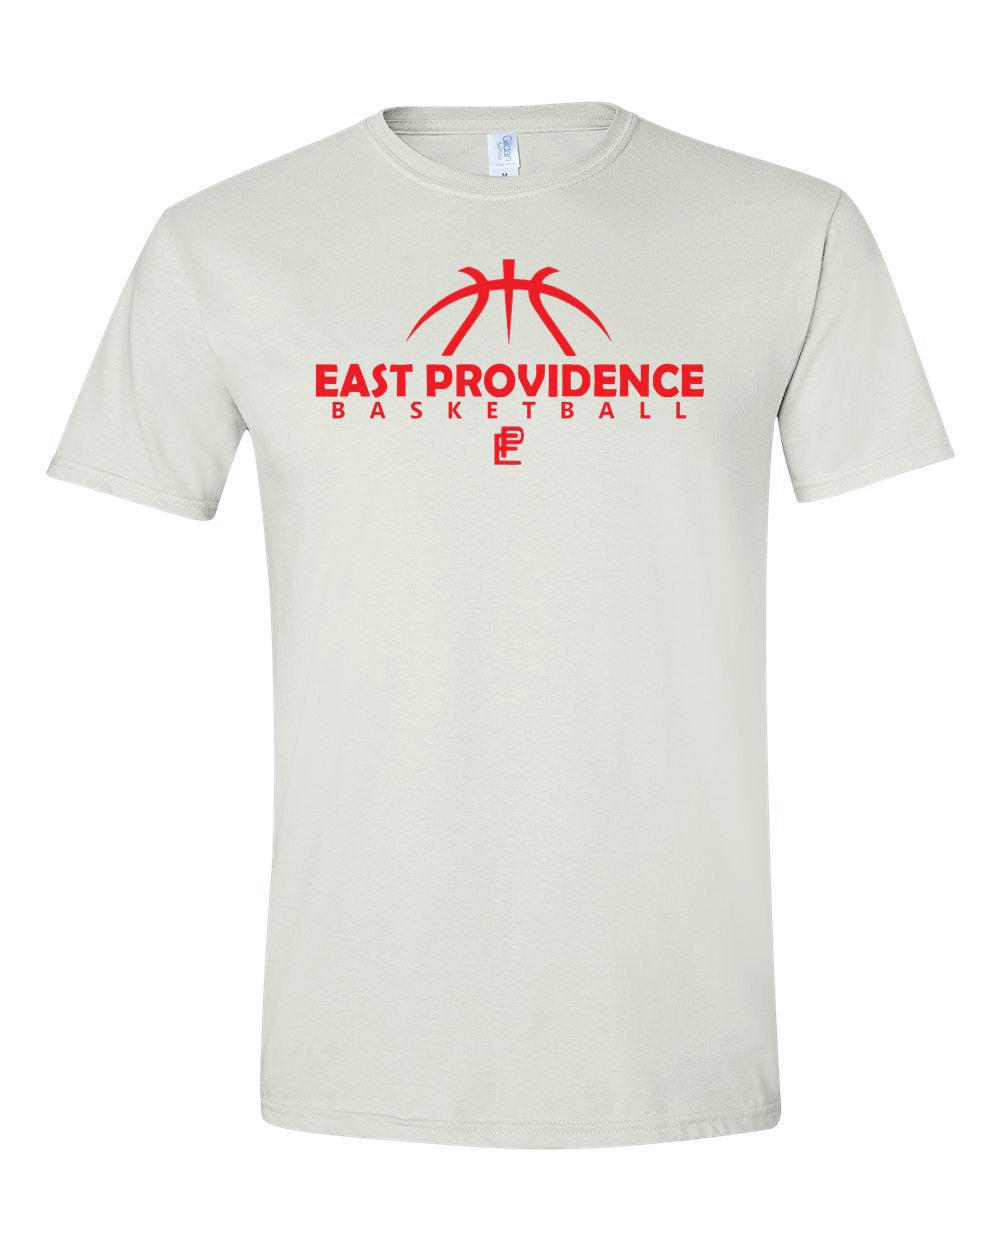 East Providence Basketball Premium White Tee Red Print